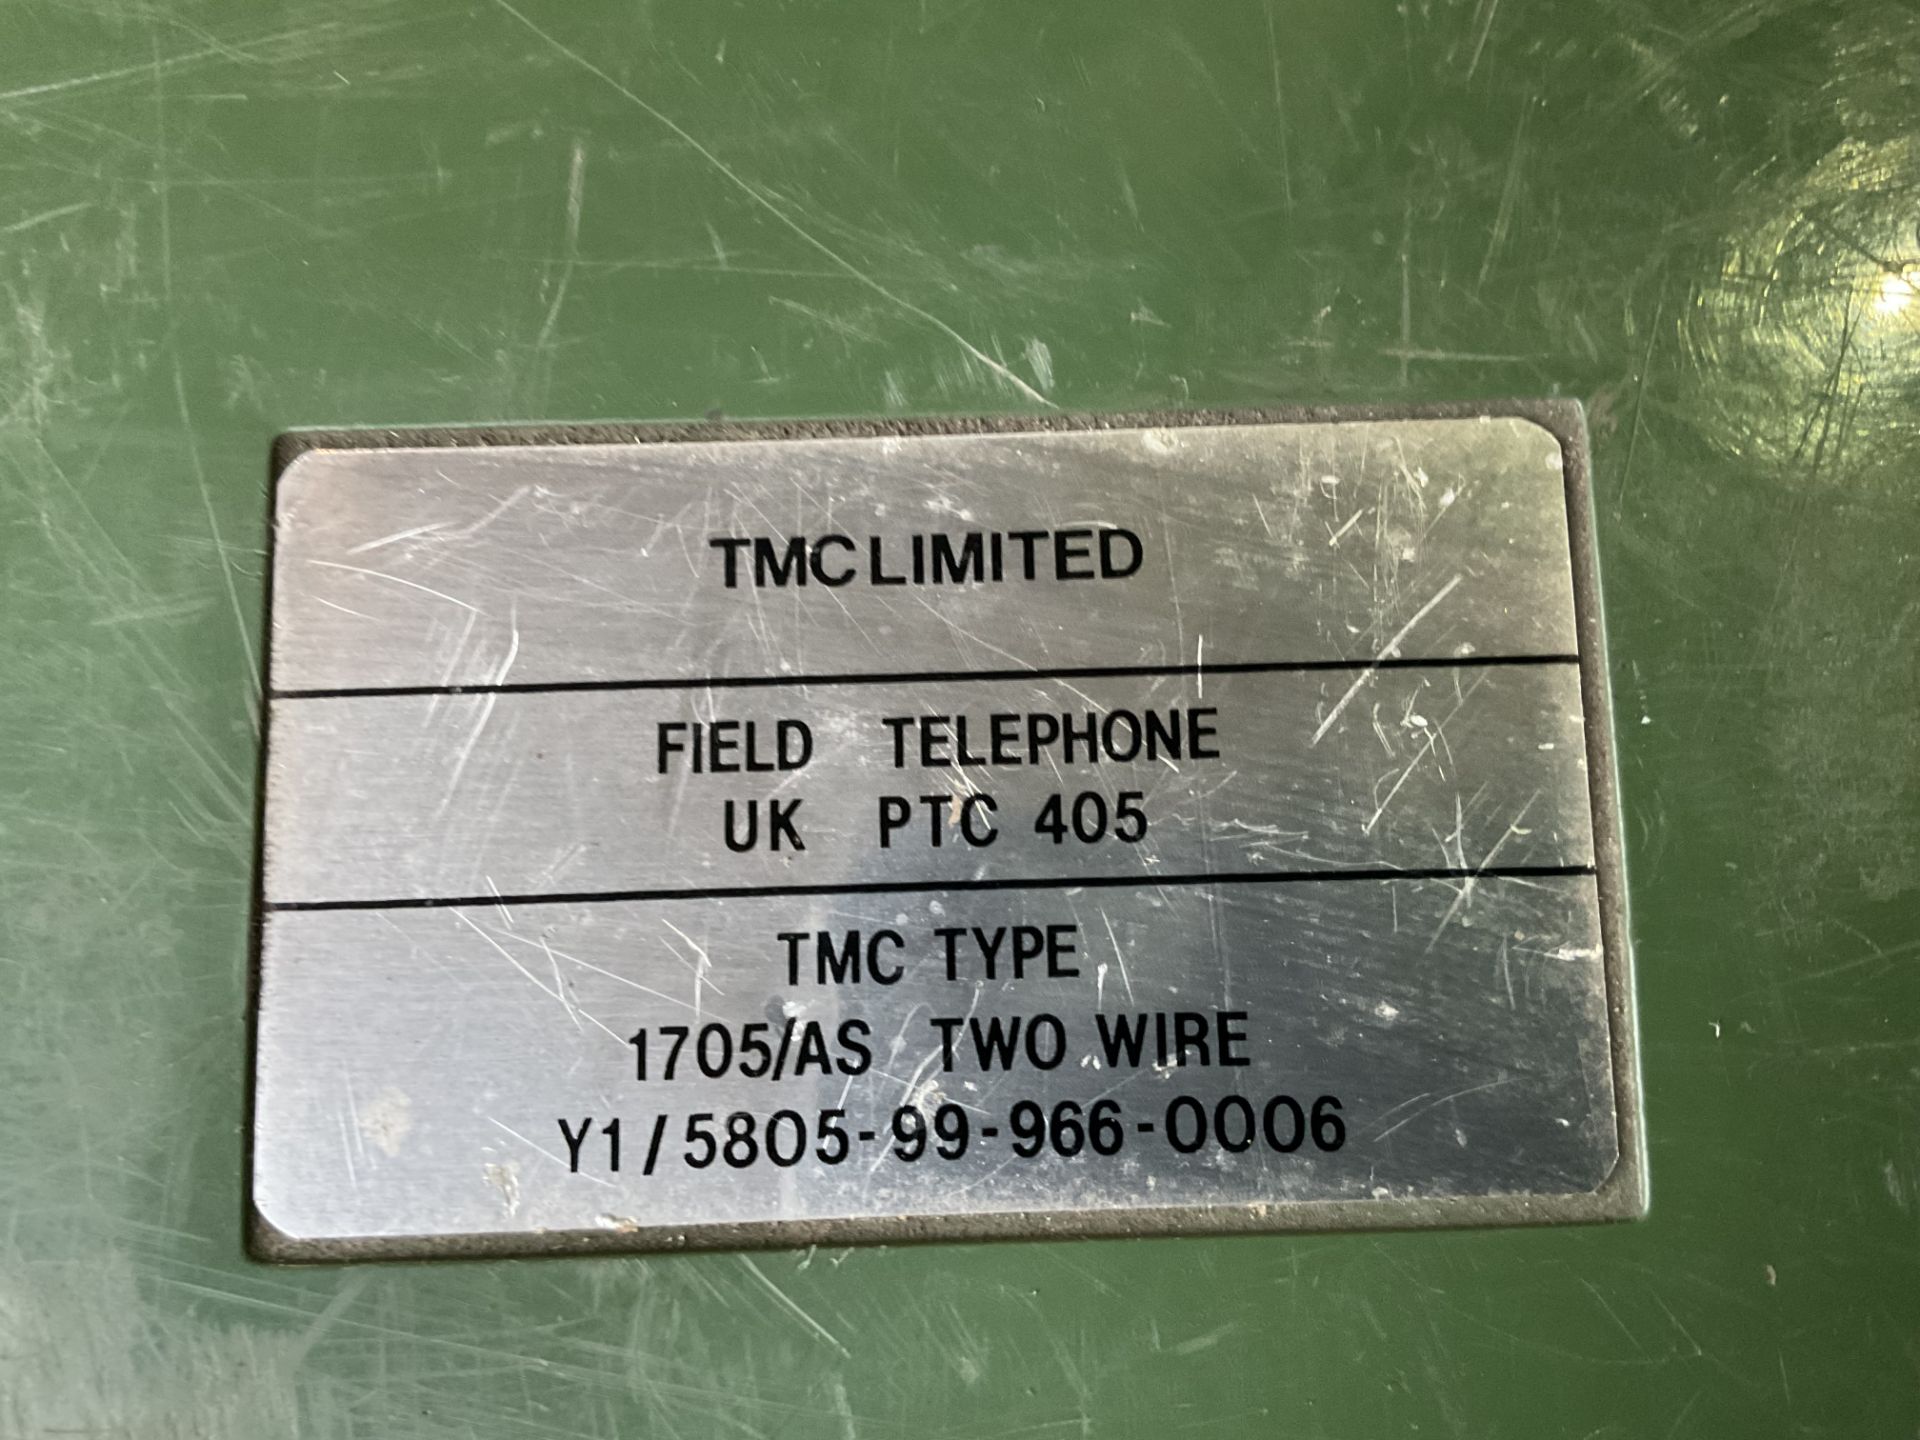 2X UK PTC 405 FIELD TELEPHONE - Image 5 of 5